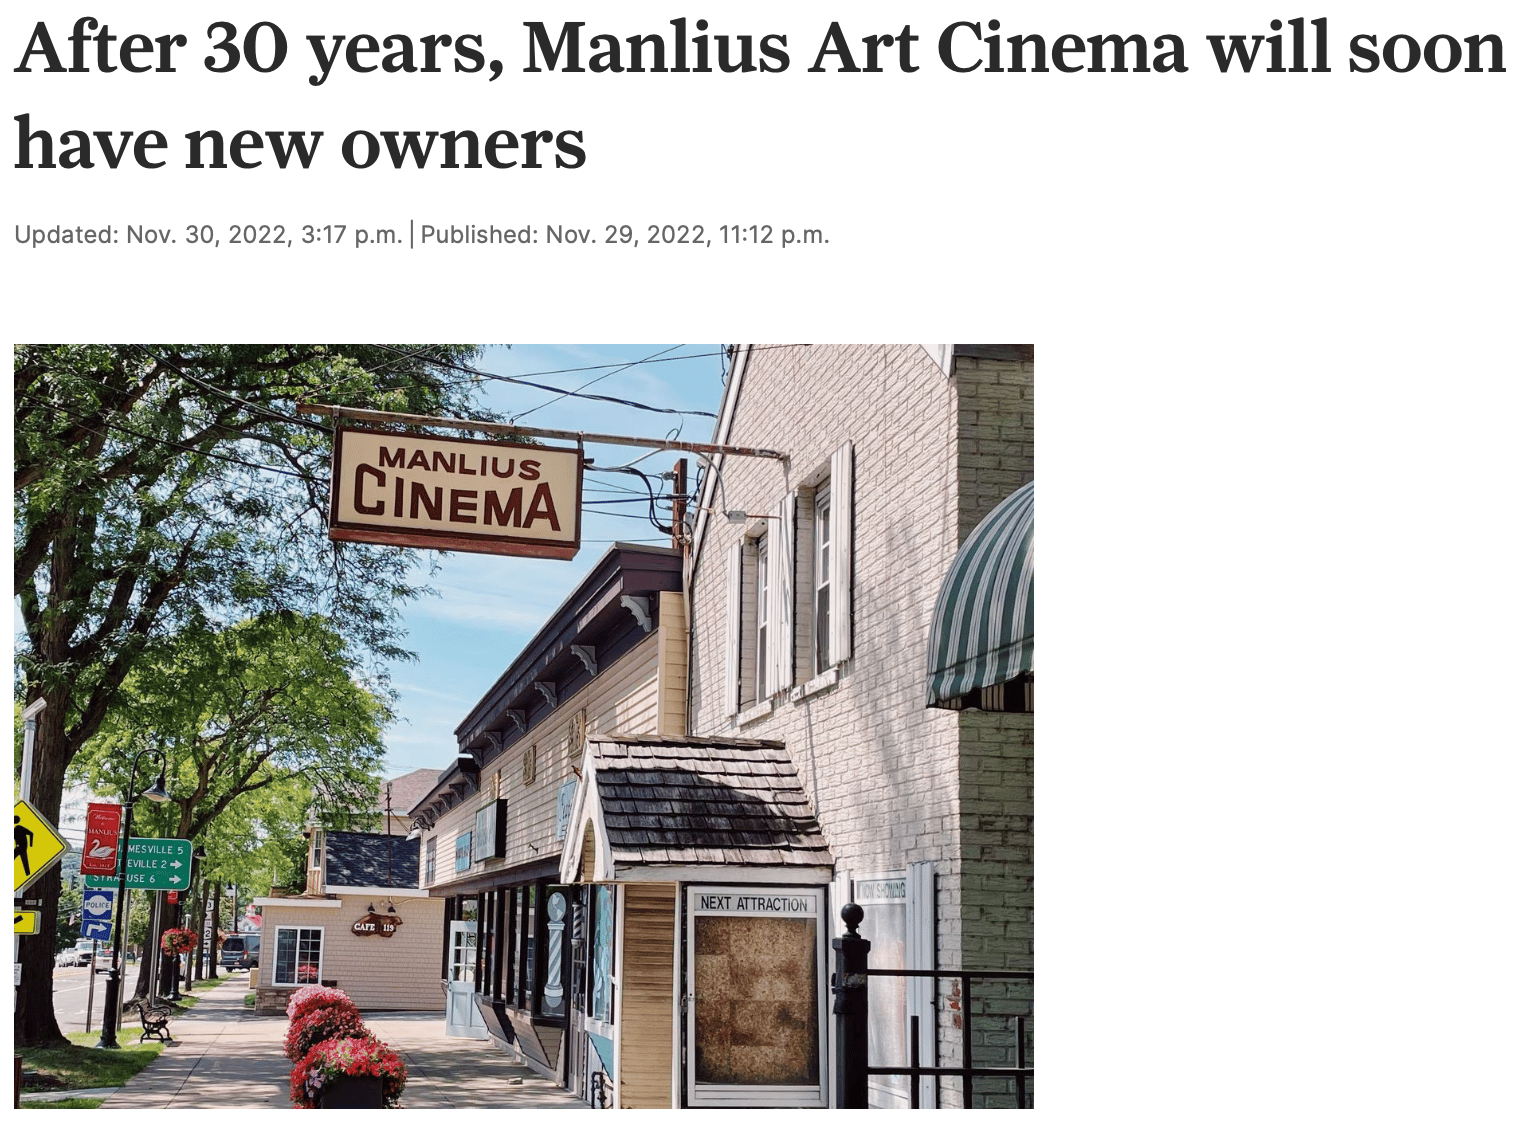 The Manlius Art Cinema., 135 E Seneca St., Manlius, originally opened in 1918 to show silent films